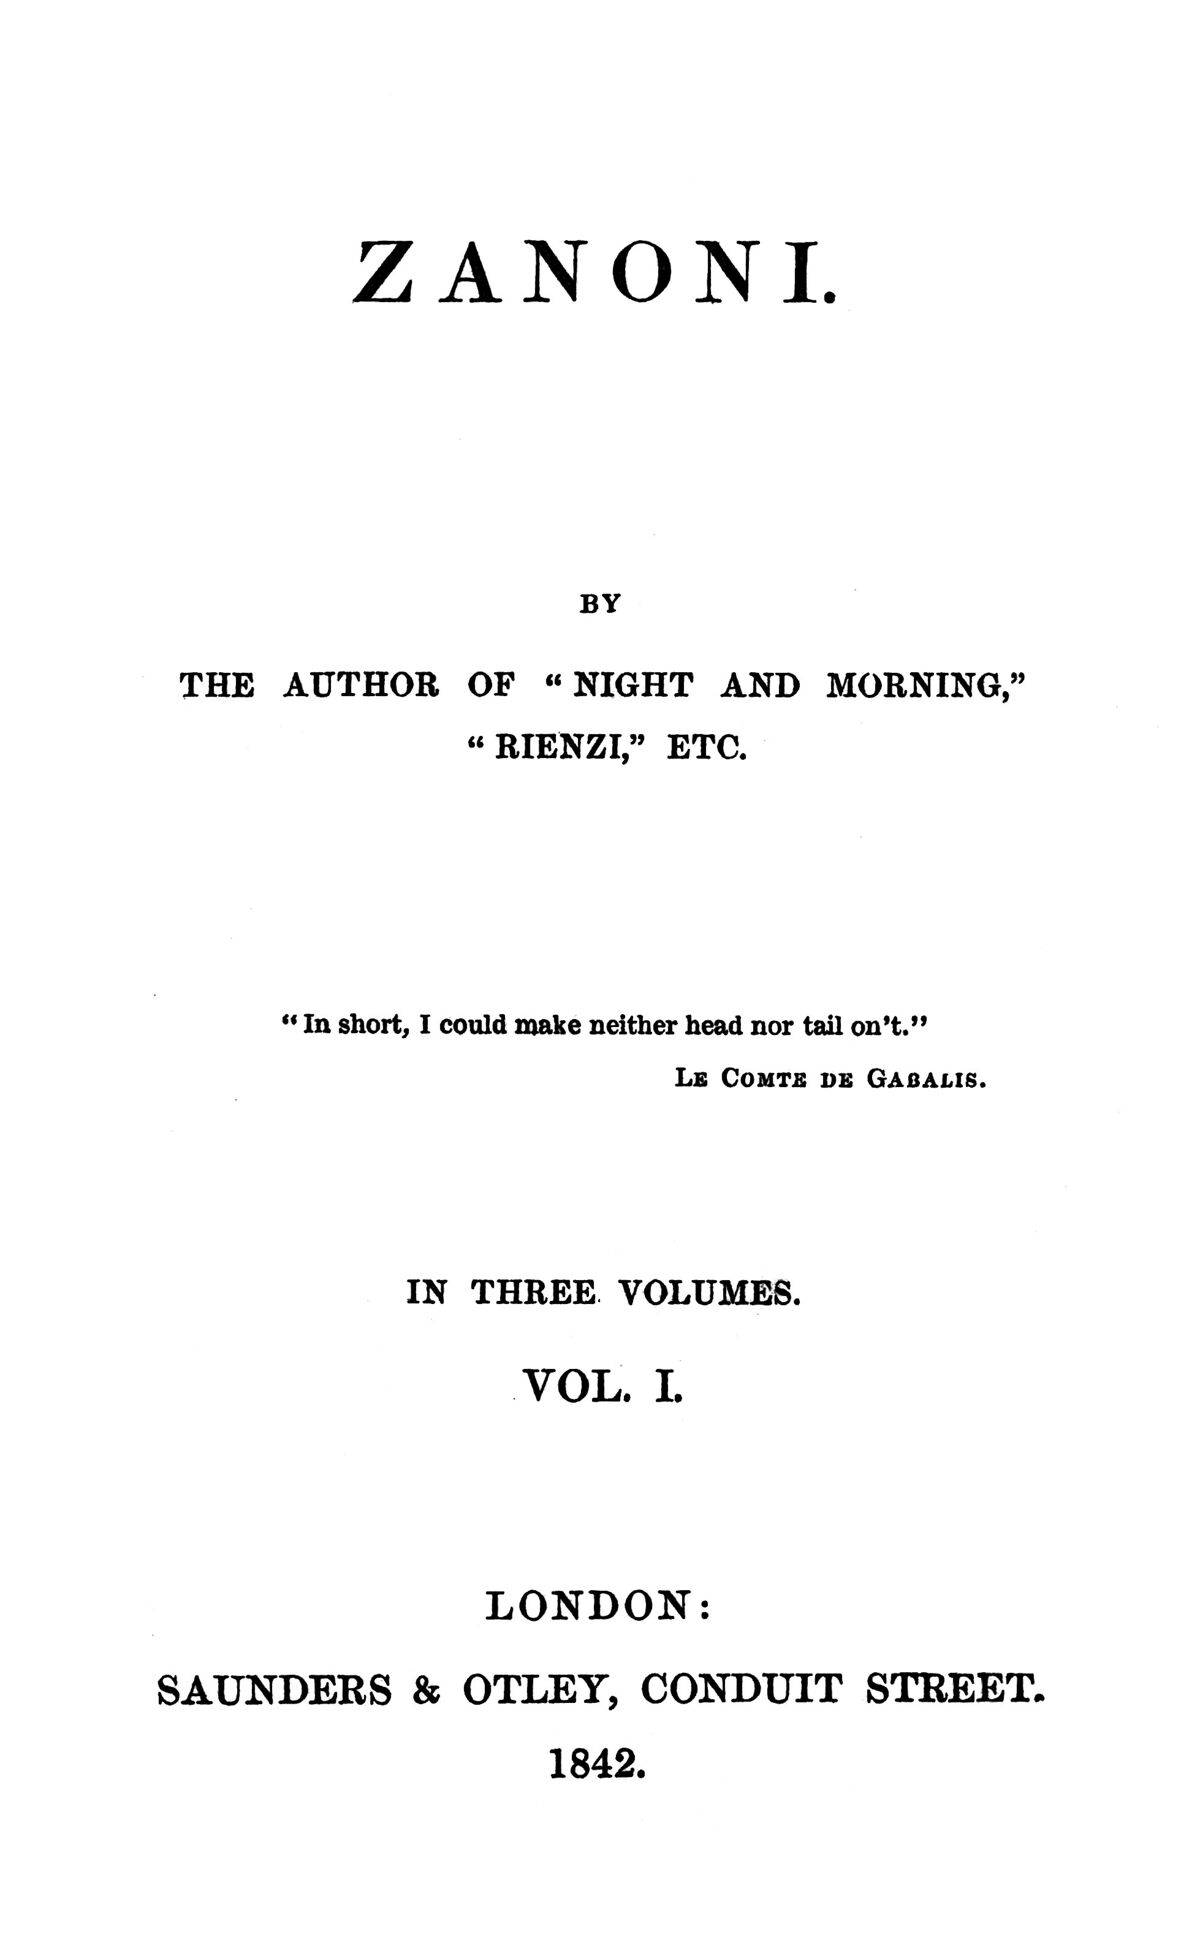 Zanoni (1842 novel) - Kook Science